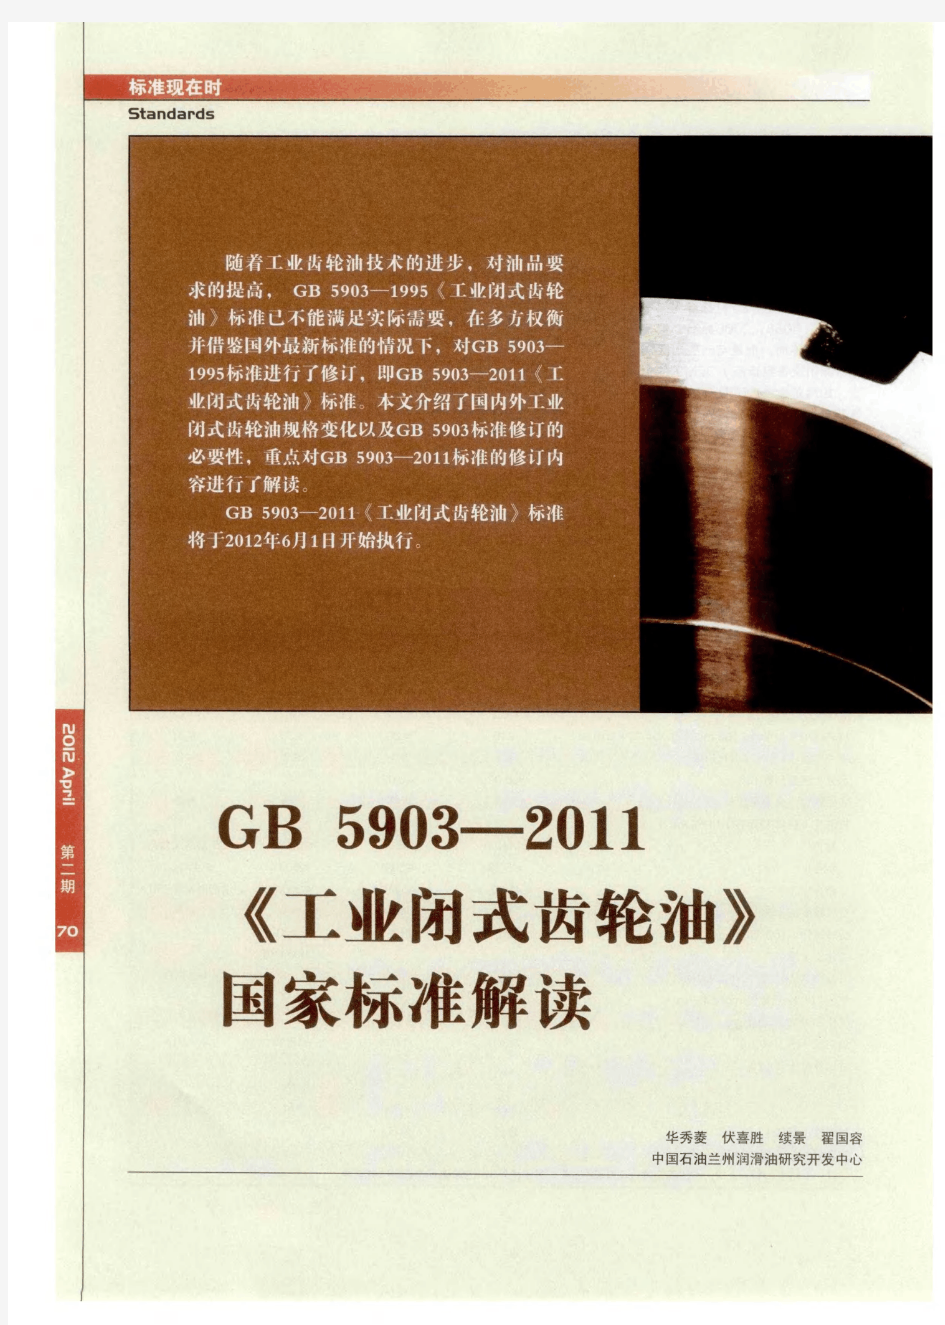 GB5903-2011《工业闭式齿轮油》国家标准解读